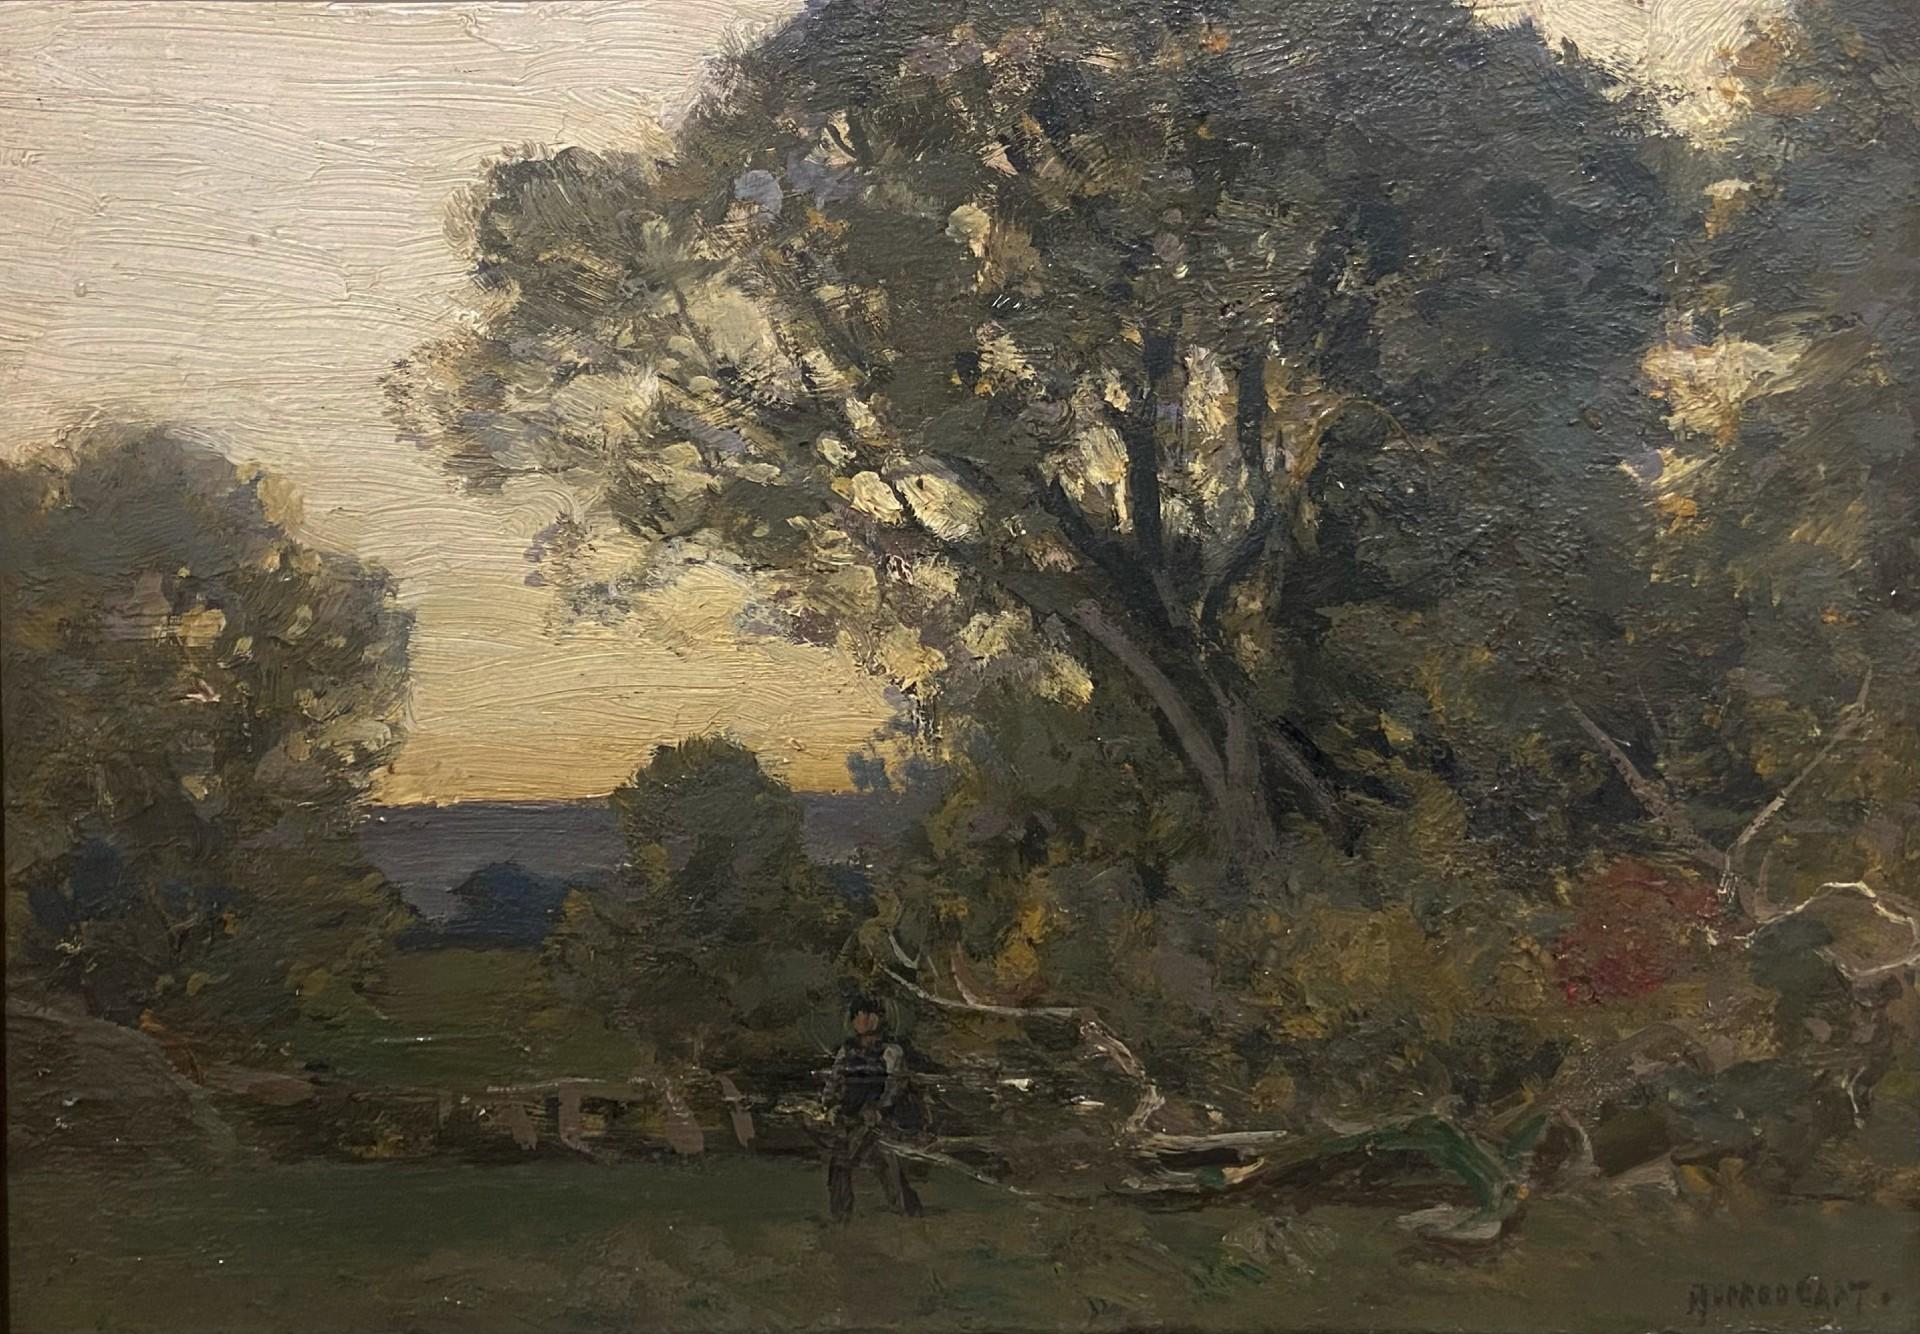 Der Holzfäller – Painting von Alfred East